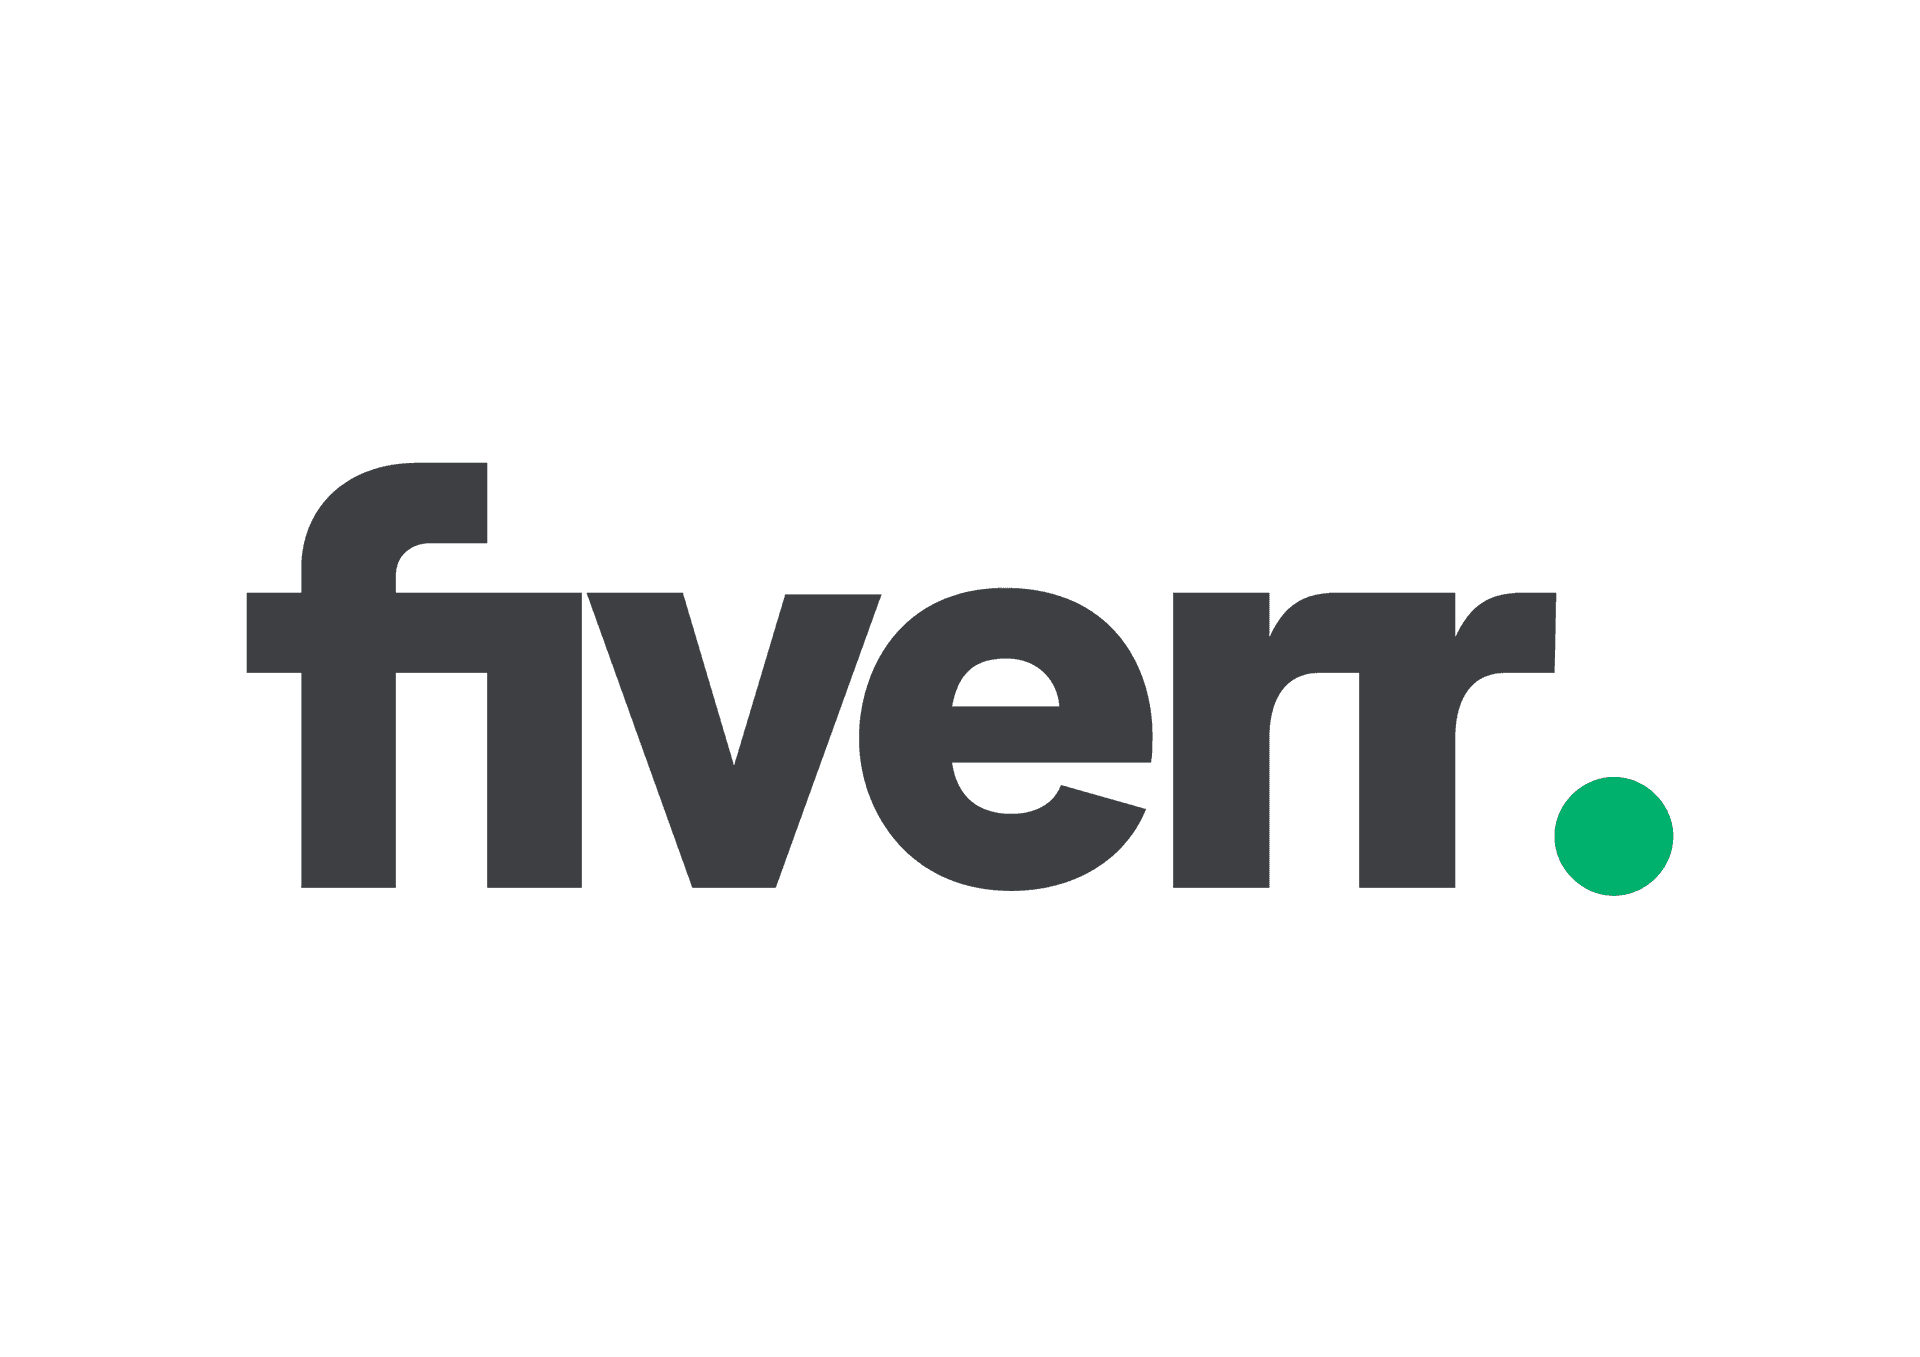 fiverr logo